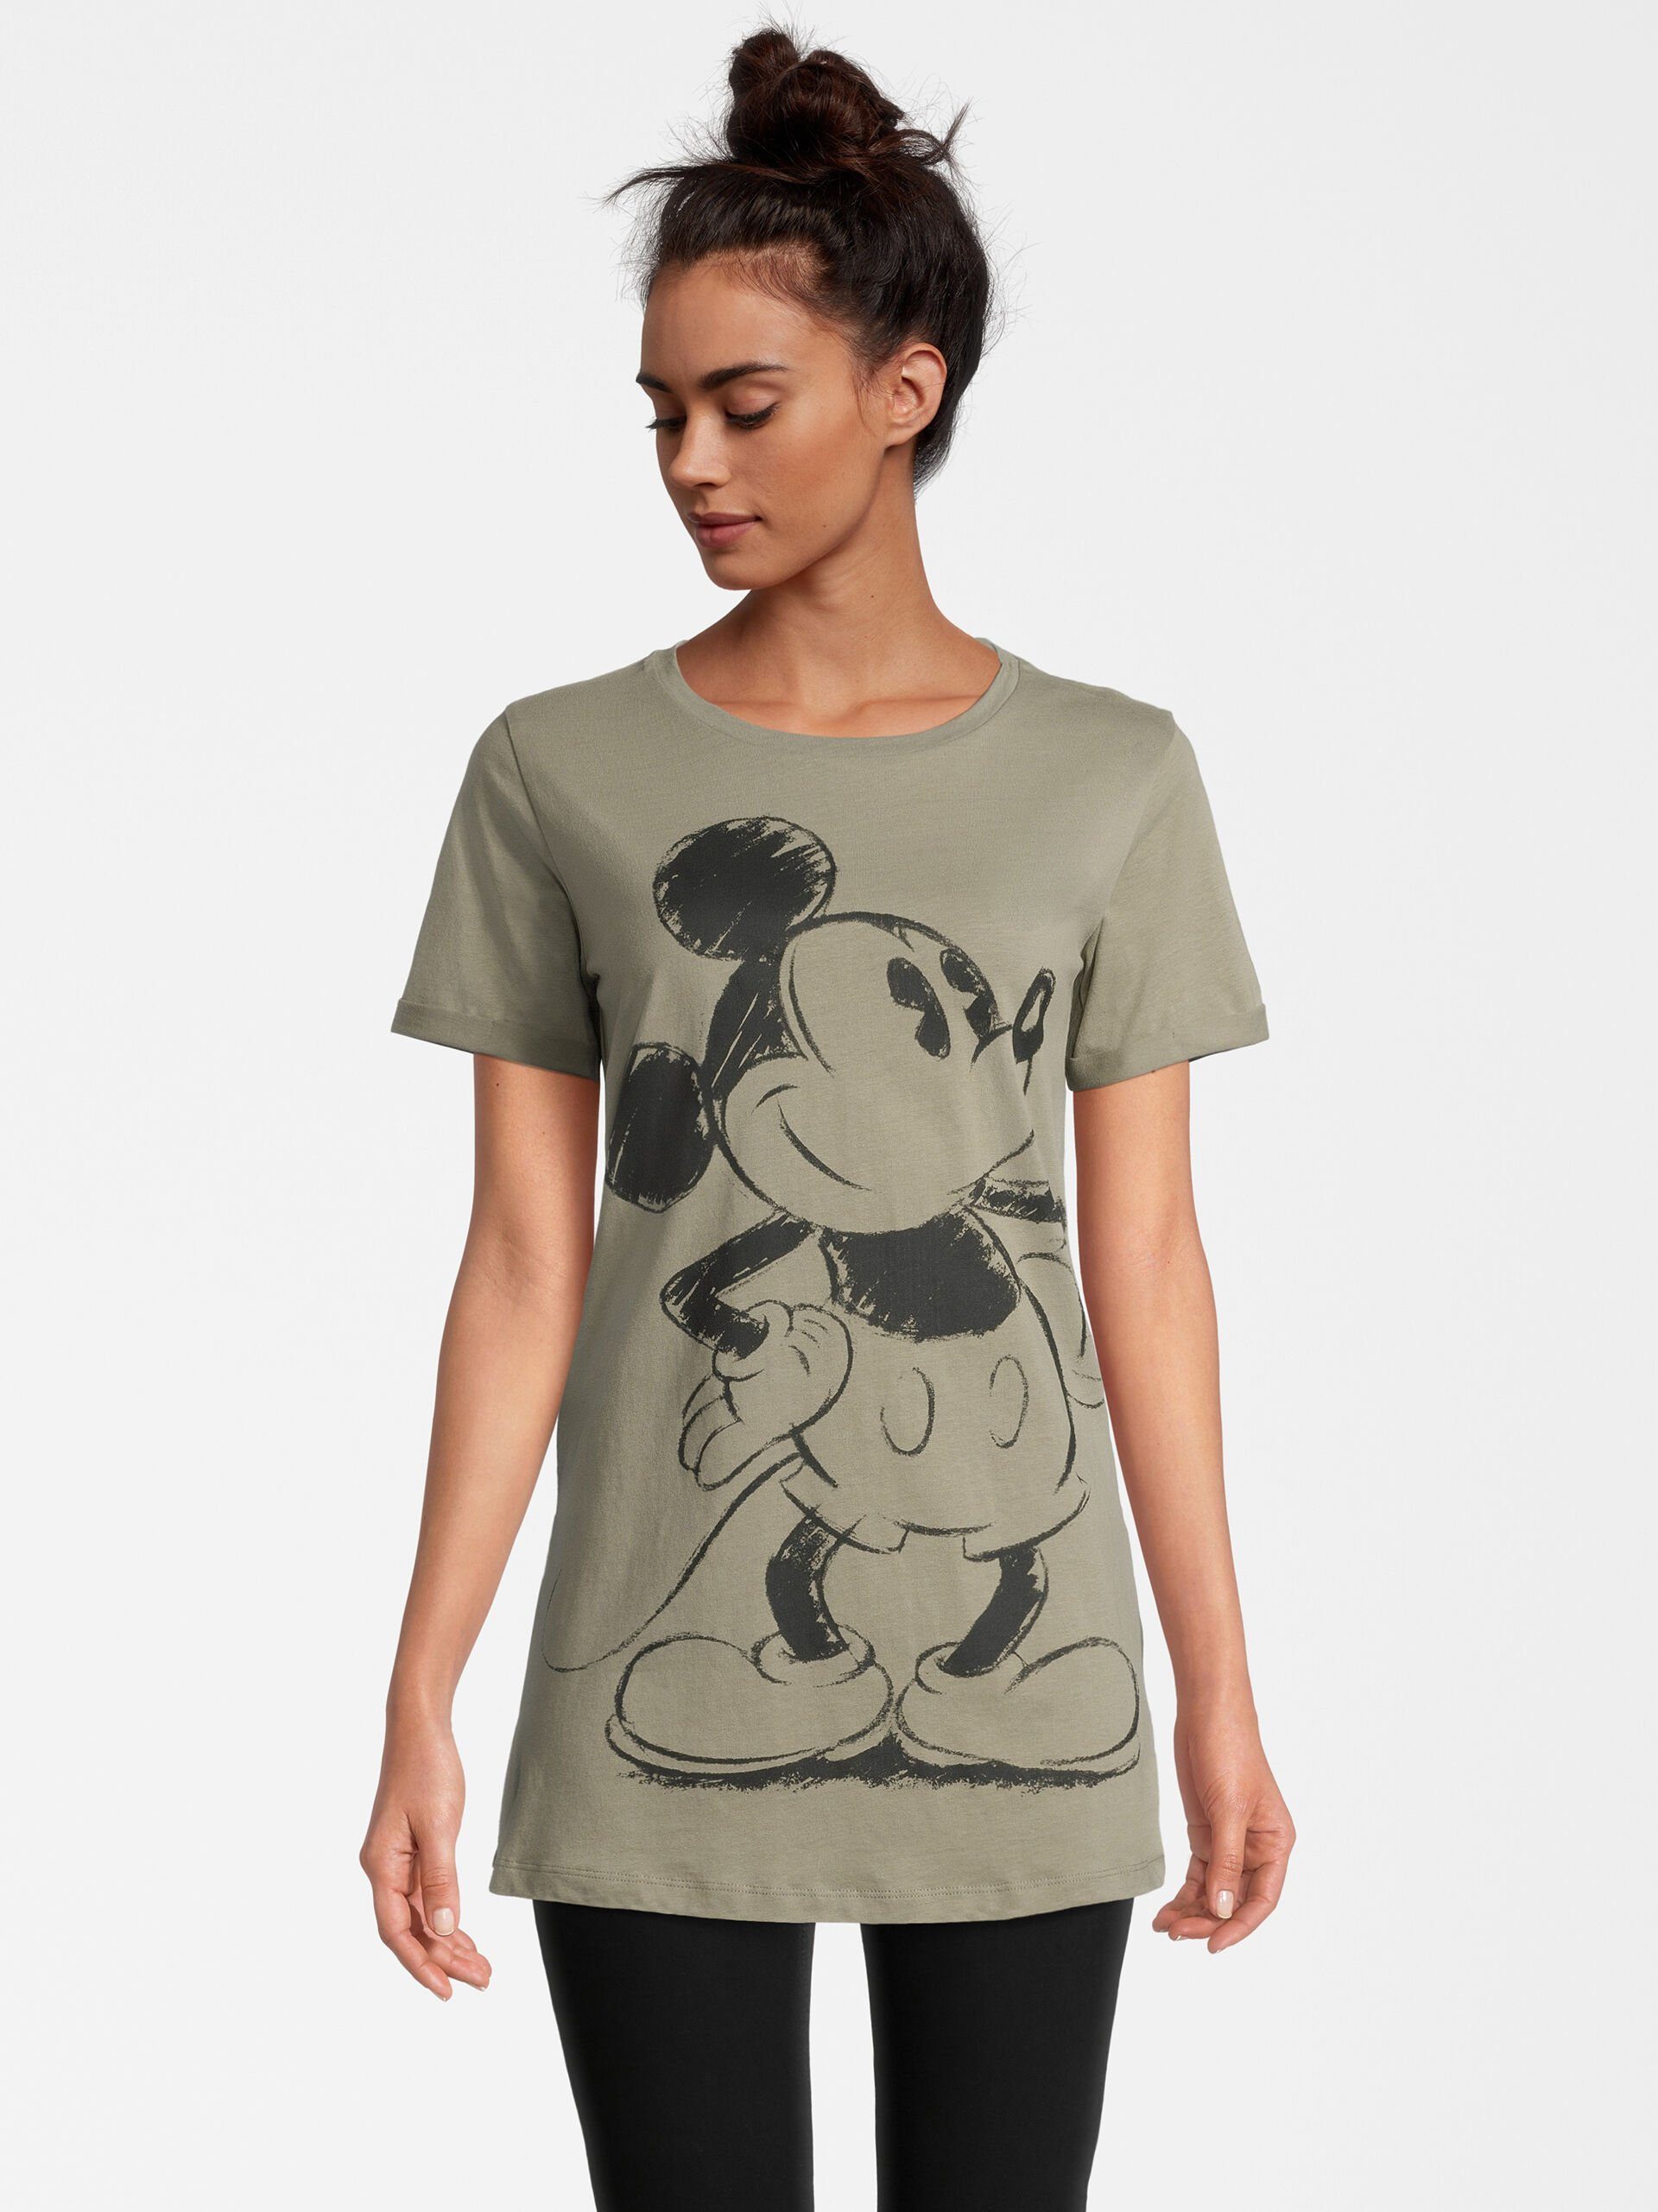 COURSE Longshirt Mickey Mouse khaki